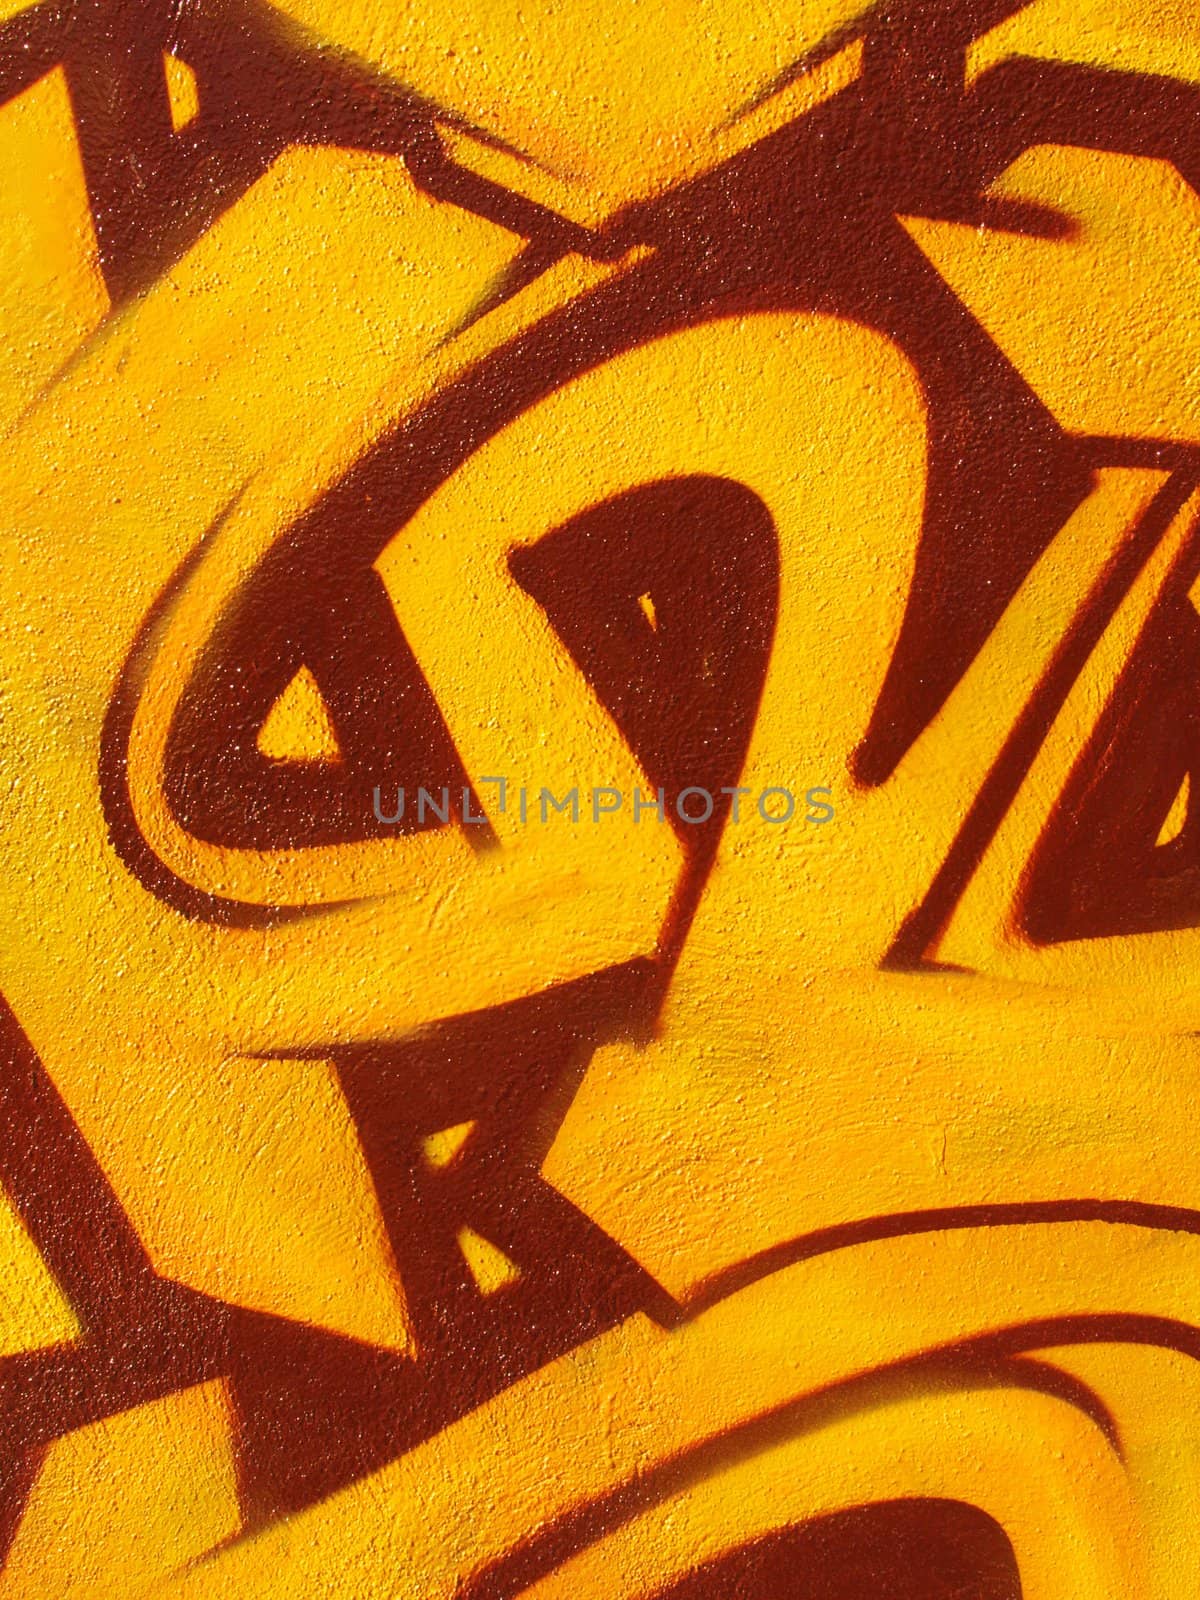 a close-up image of an orange graffiti